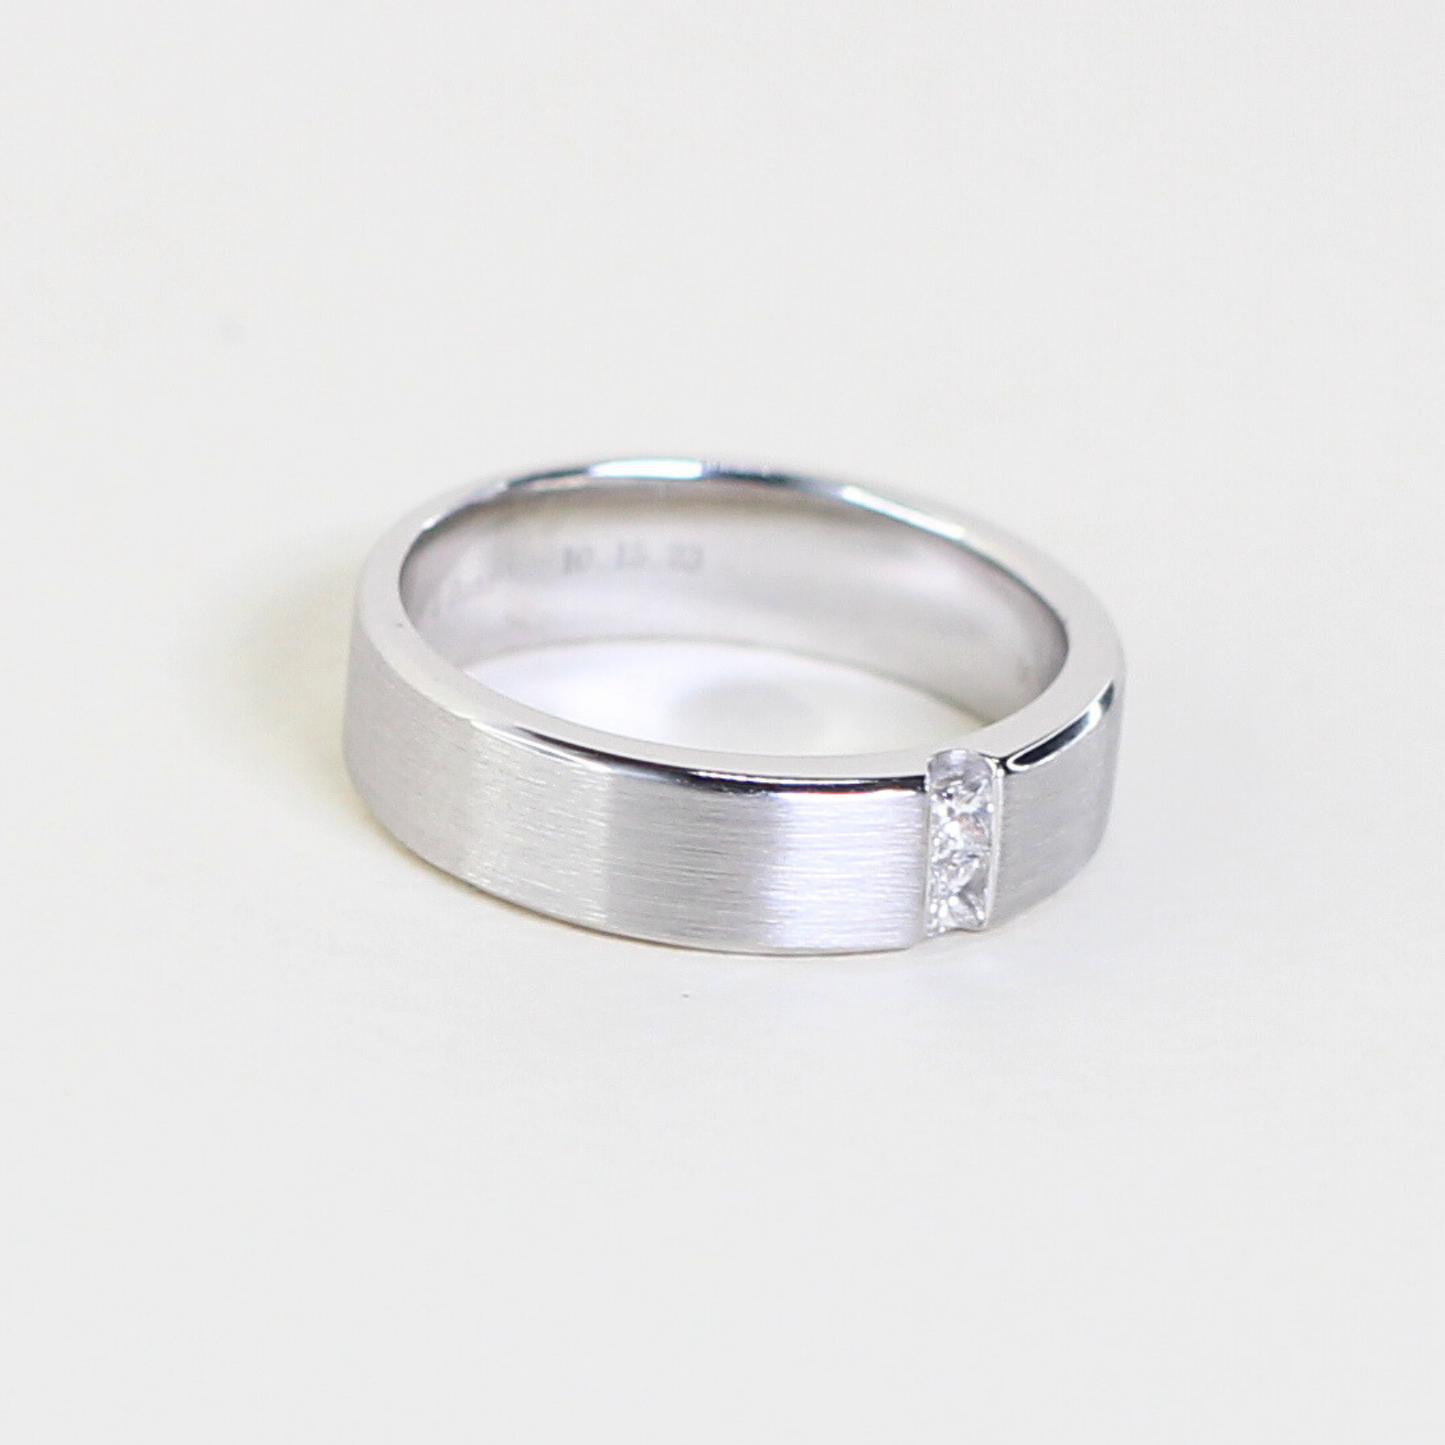 Male wedding ring with Princess cut diamonds in satin finish